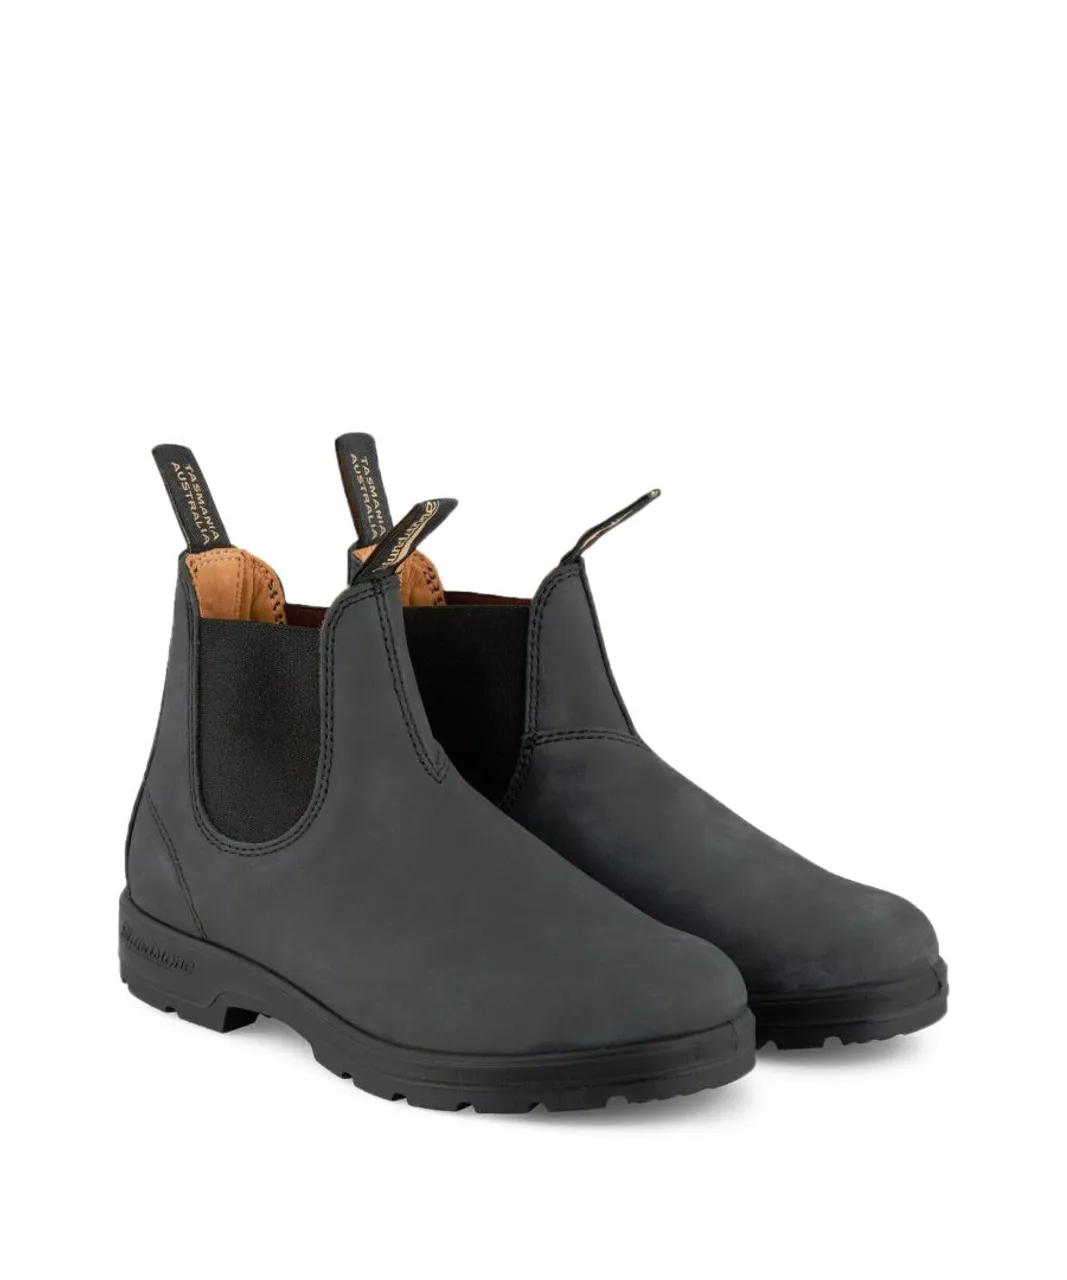 Blundstone 587 Classic Unisex Boot - Black Leather